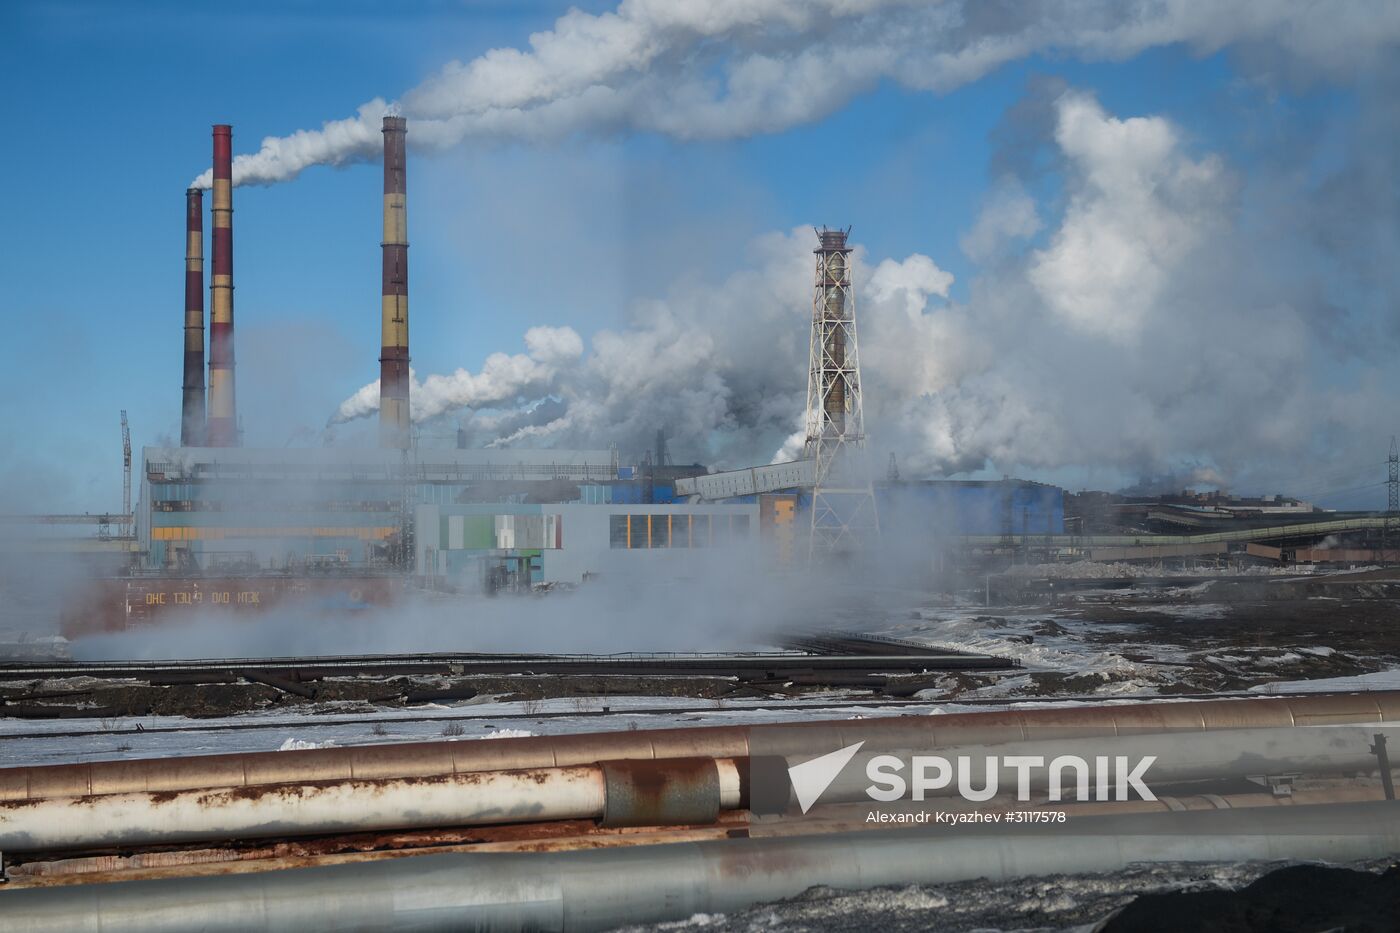 Nadezhdinsk metallurgical plant of Norilsk Nickel Group